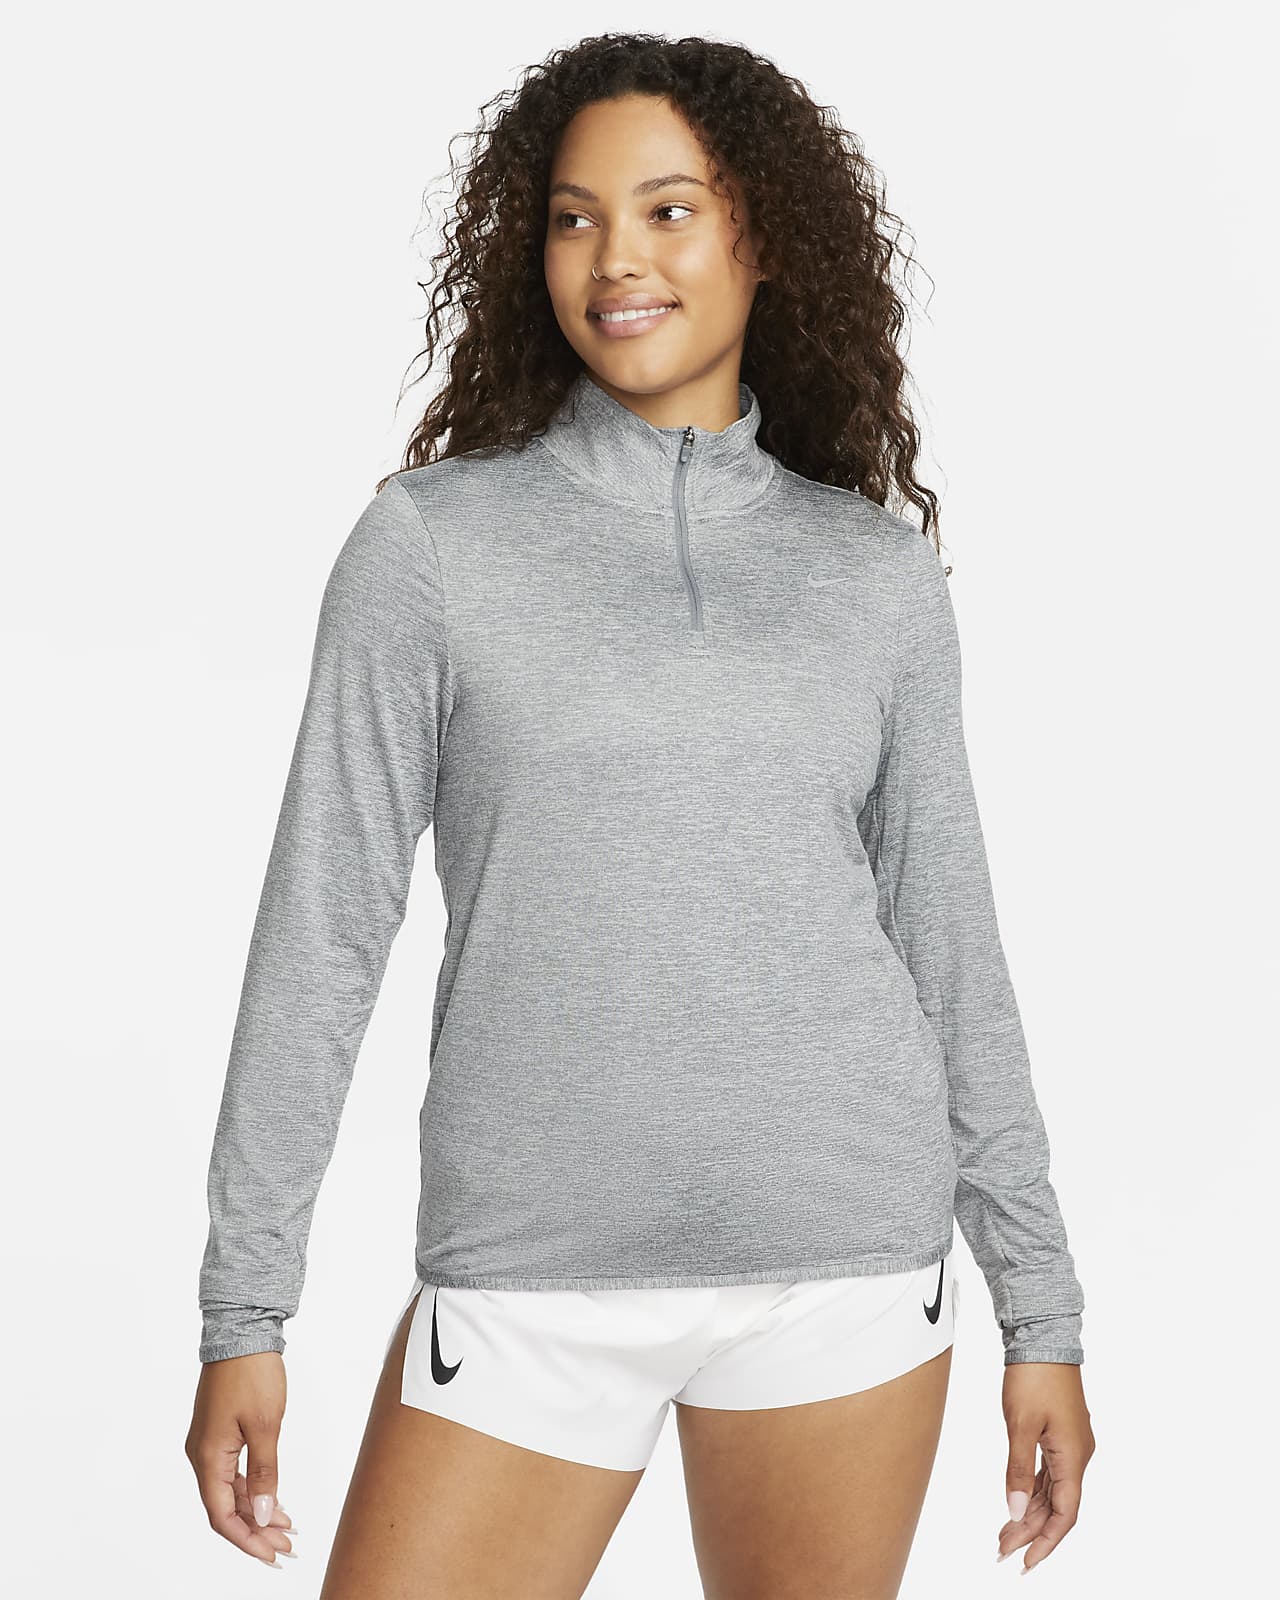 Nike Dri Fit Sports Bra size S/P/CH (Small/Petite), Women's Fashion,  Activewear on Carousell